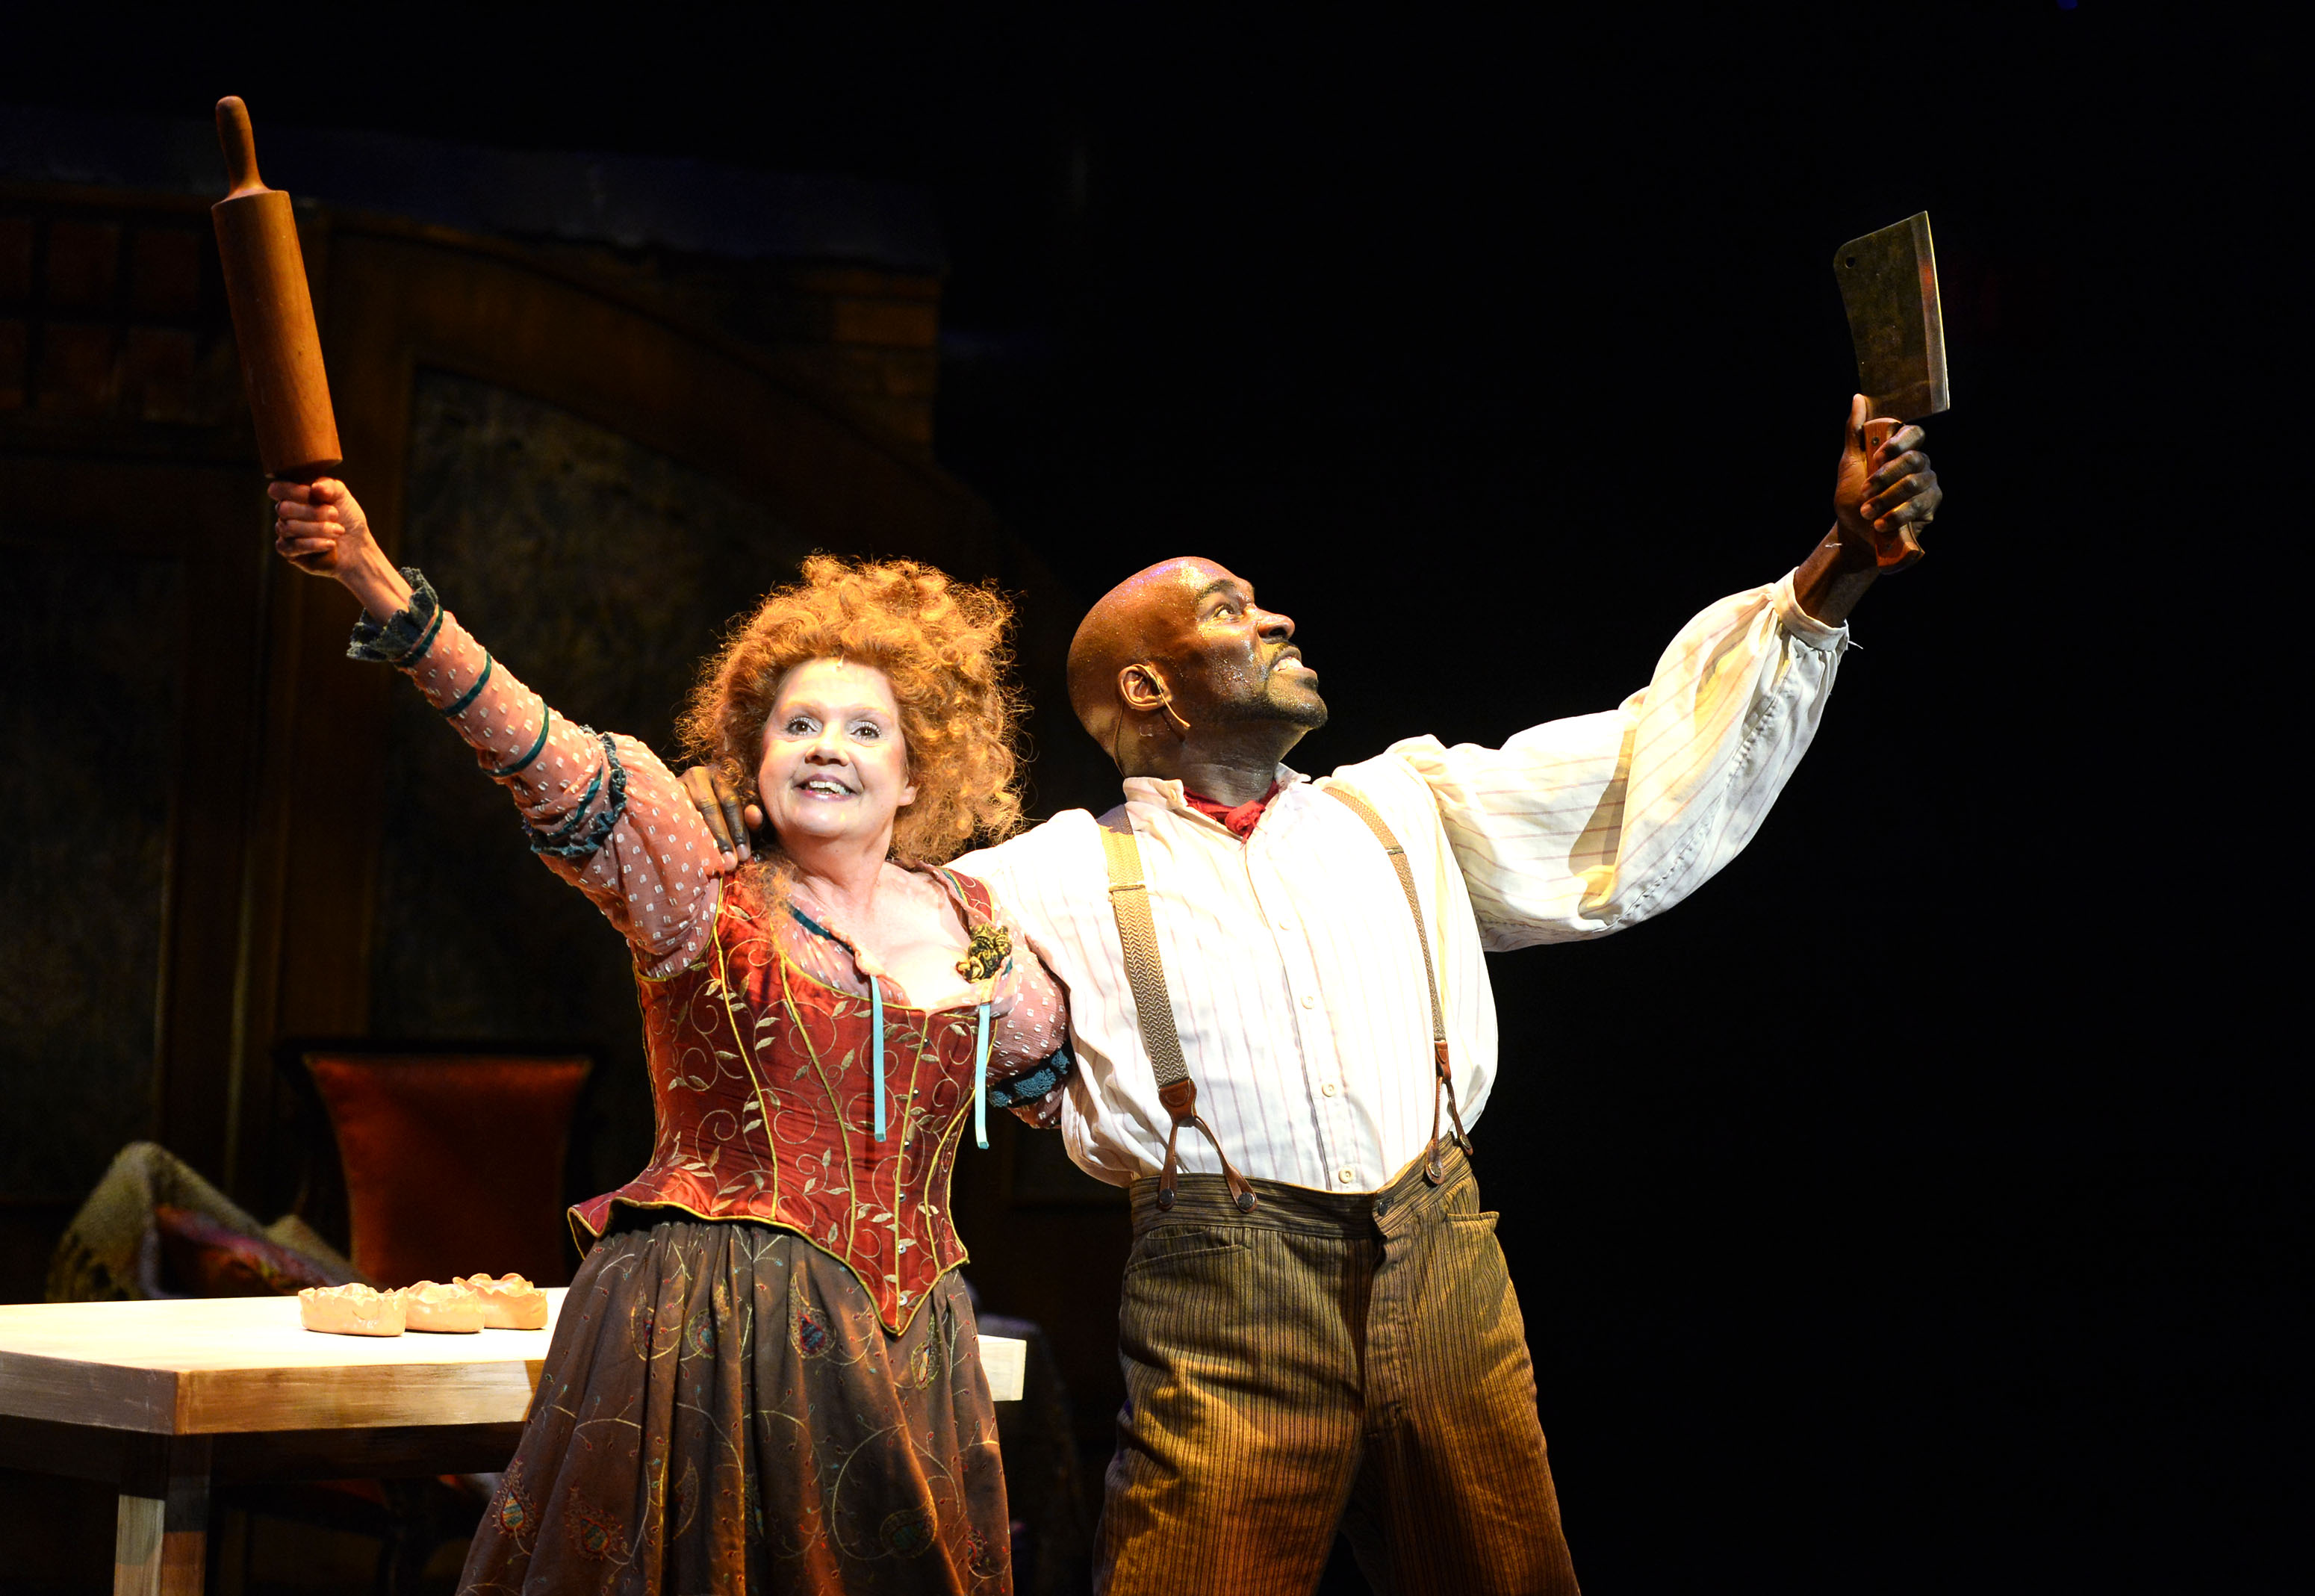 Annie Golden as Mrs. Lovett and David St. Louis as Sweeney Todd. (photo by Jon Gardiner)